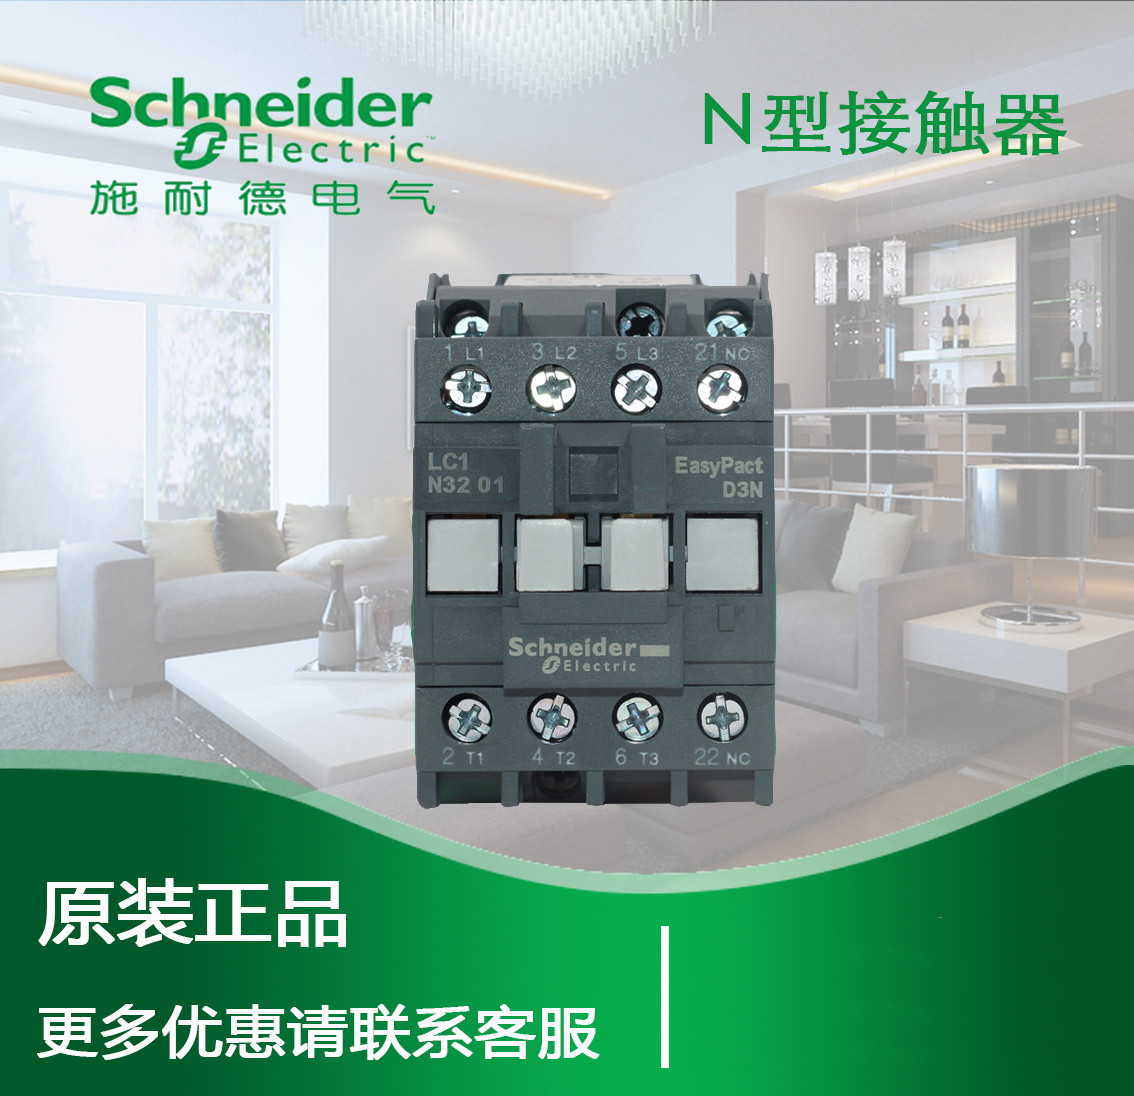 Schneider D3N ac contactor 25A 1NC 220V LC1N2501M5N